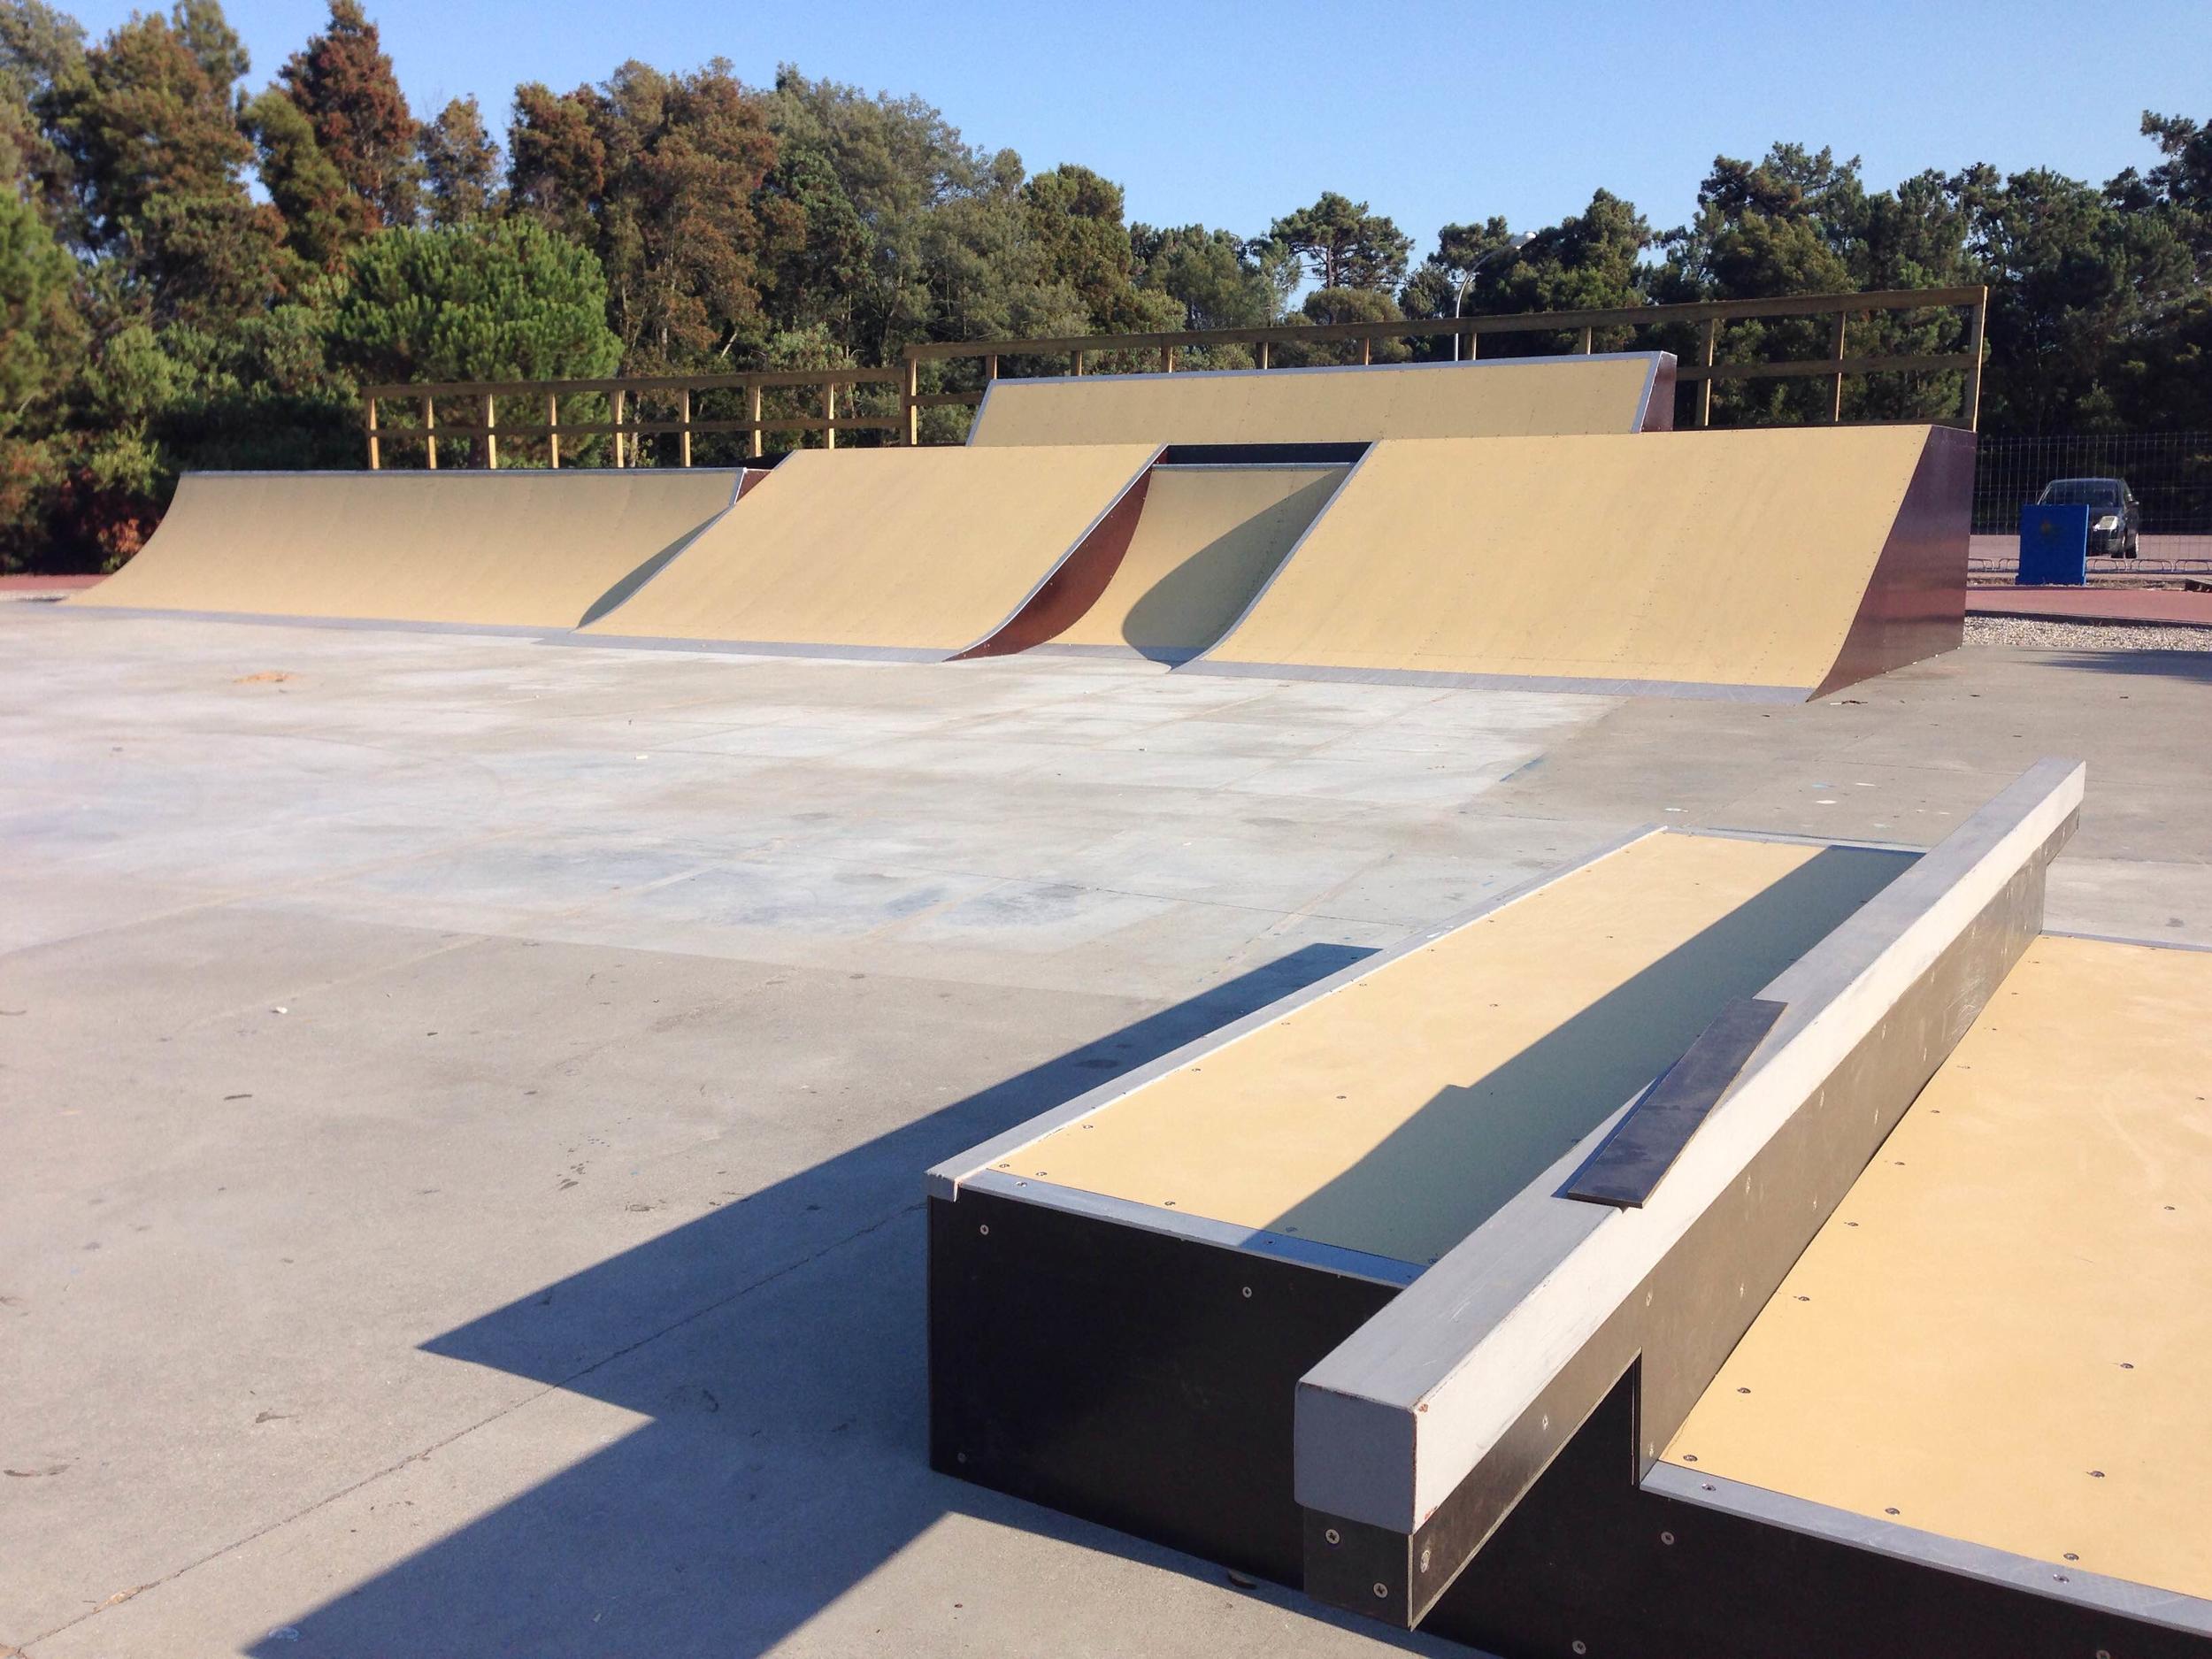 Skate Park renovado será inaugurado com Campeonato 